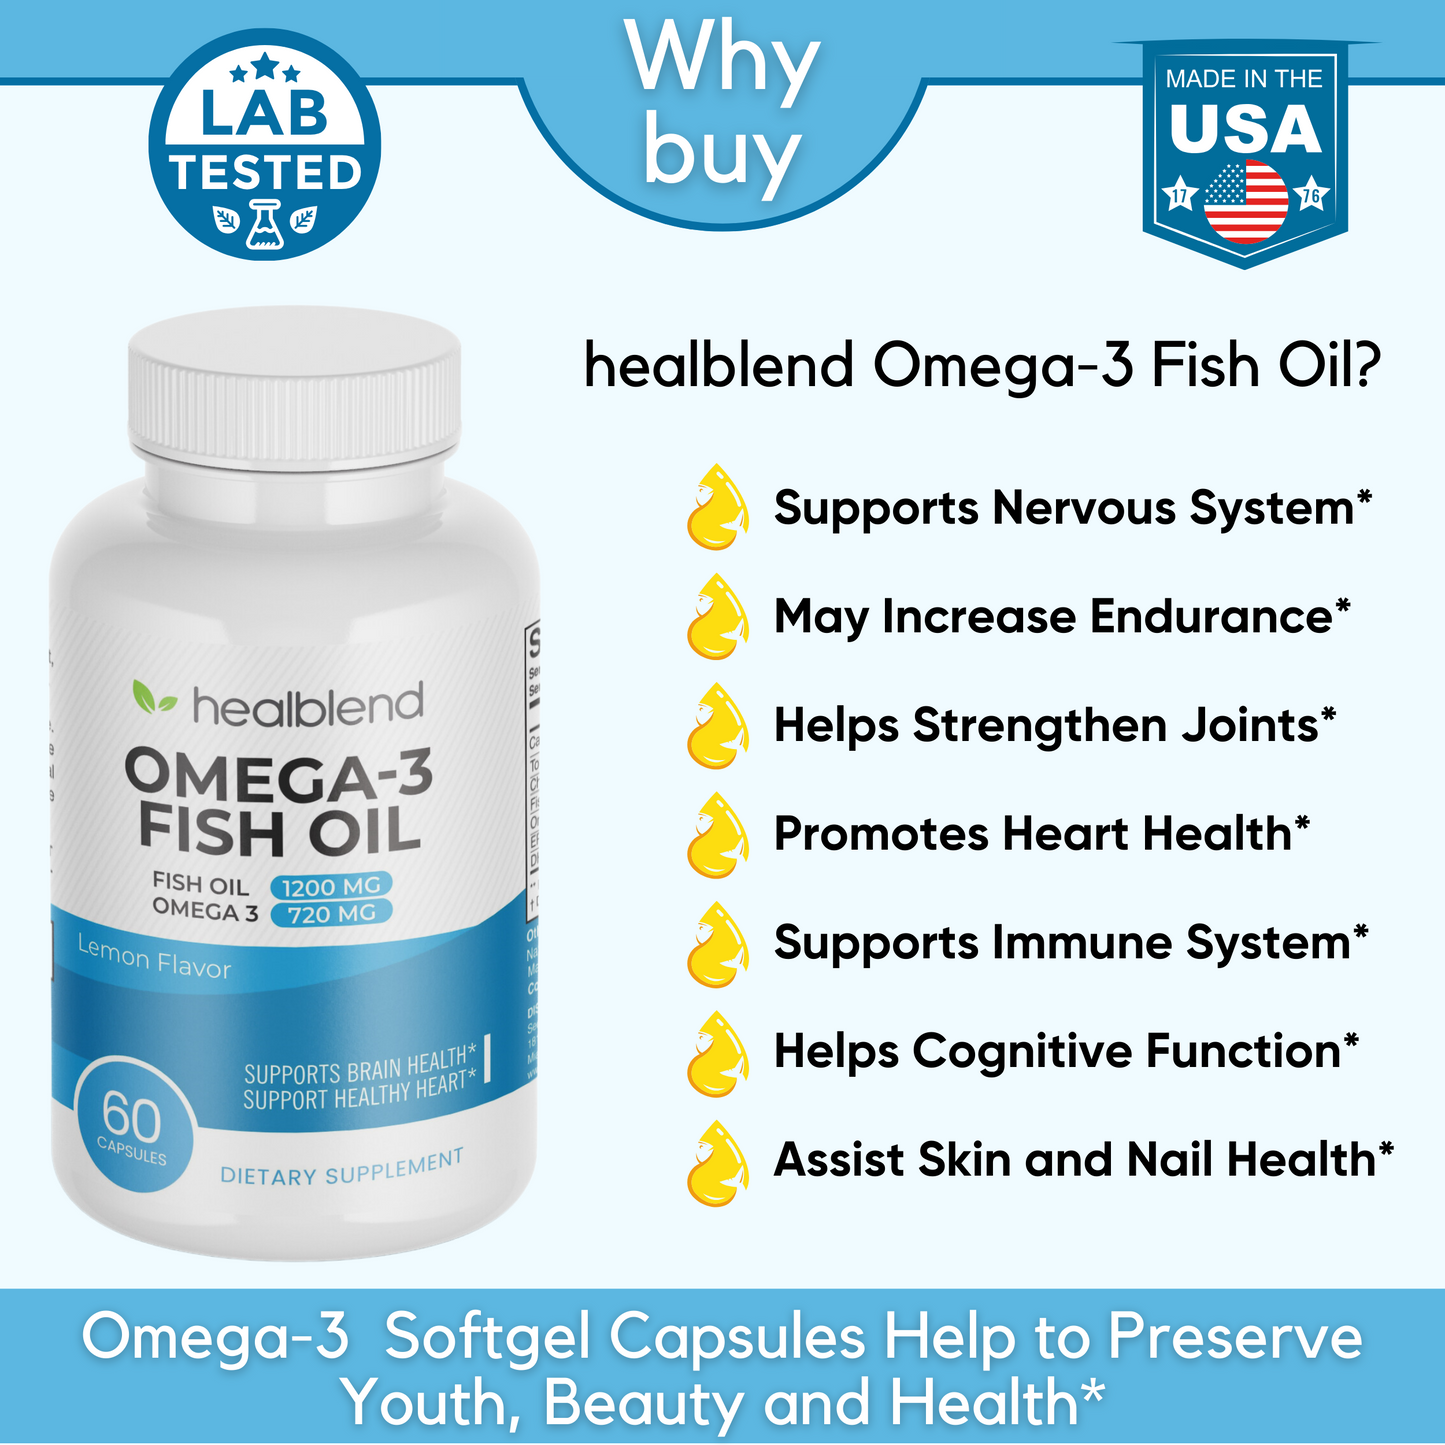 DHA/EPA Omega 3 Fish Oil Pills, Lemon Flavor - 60 Soft Gels